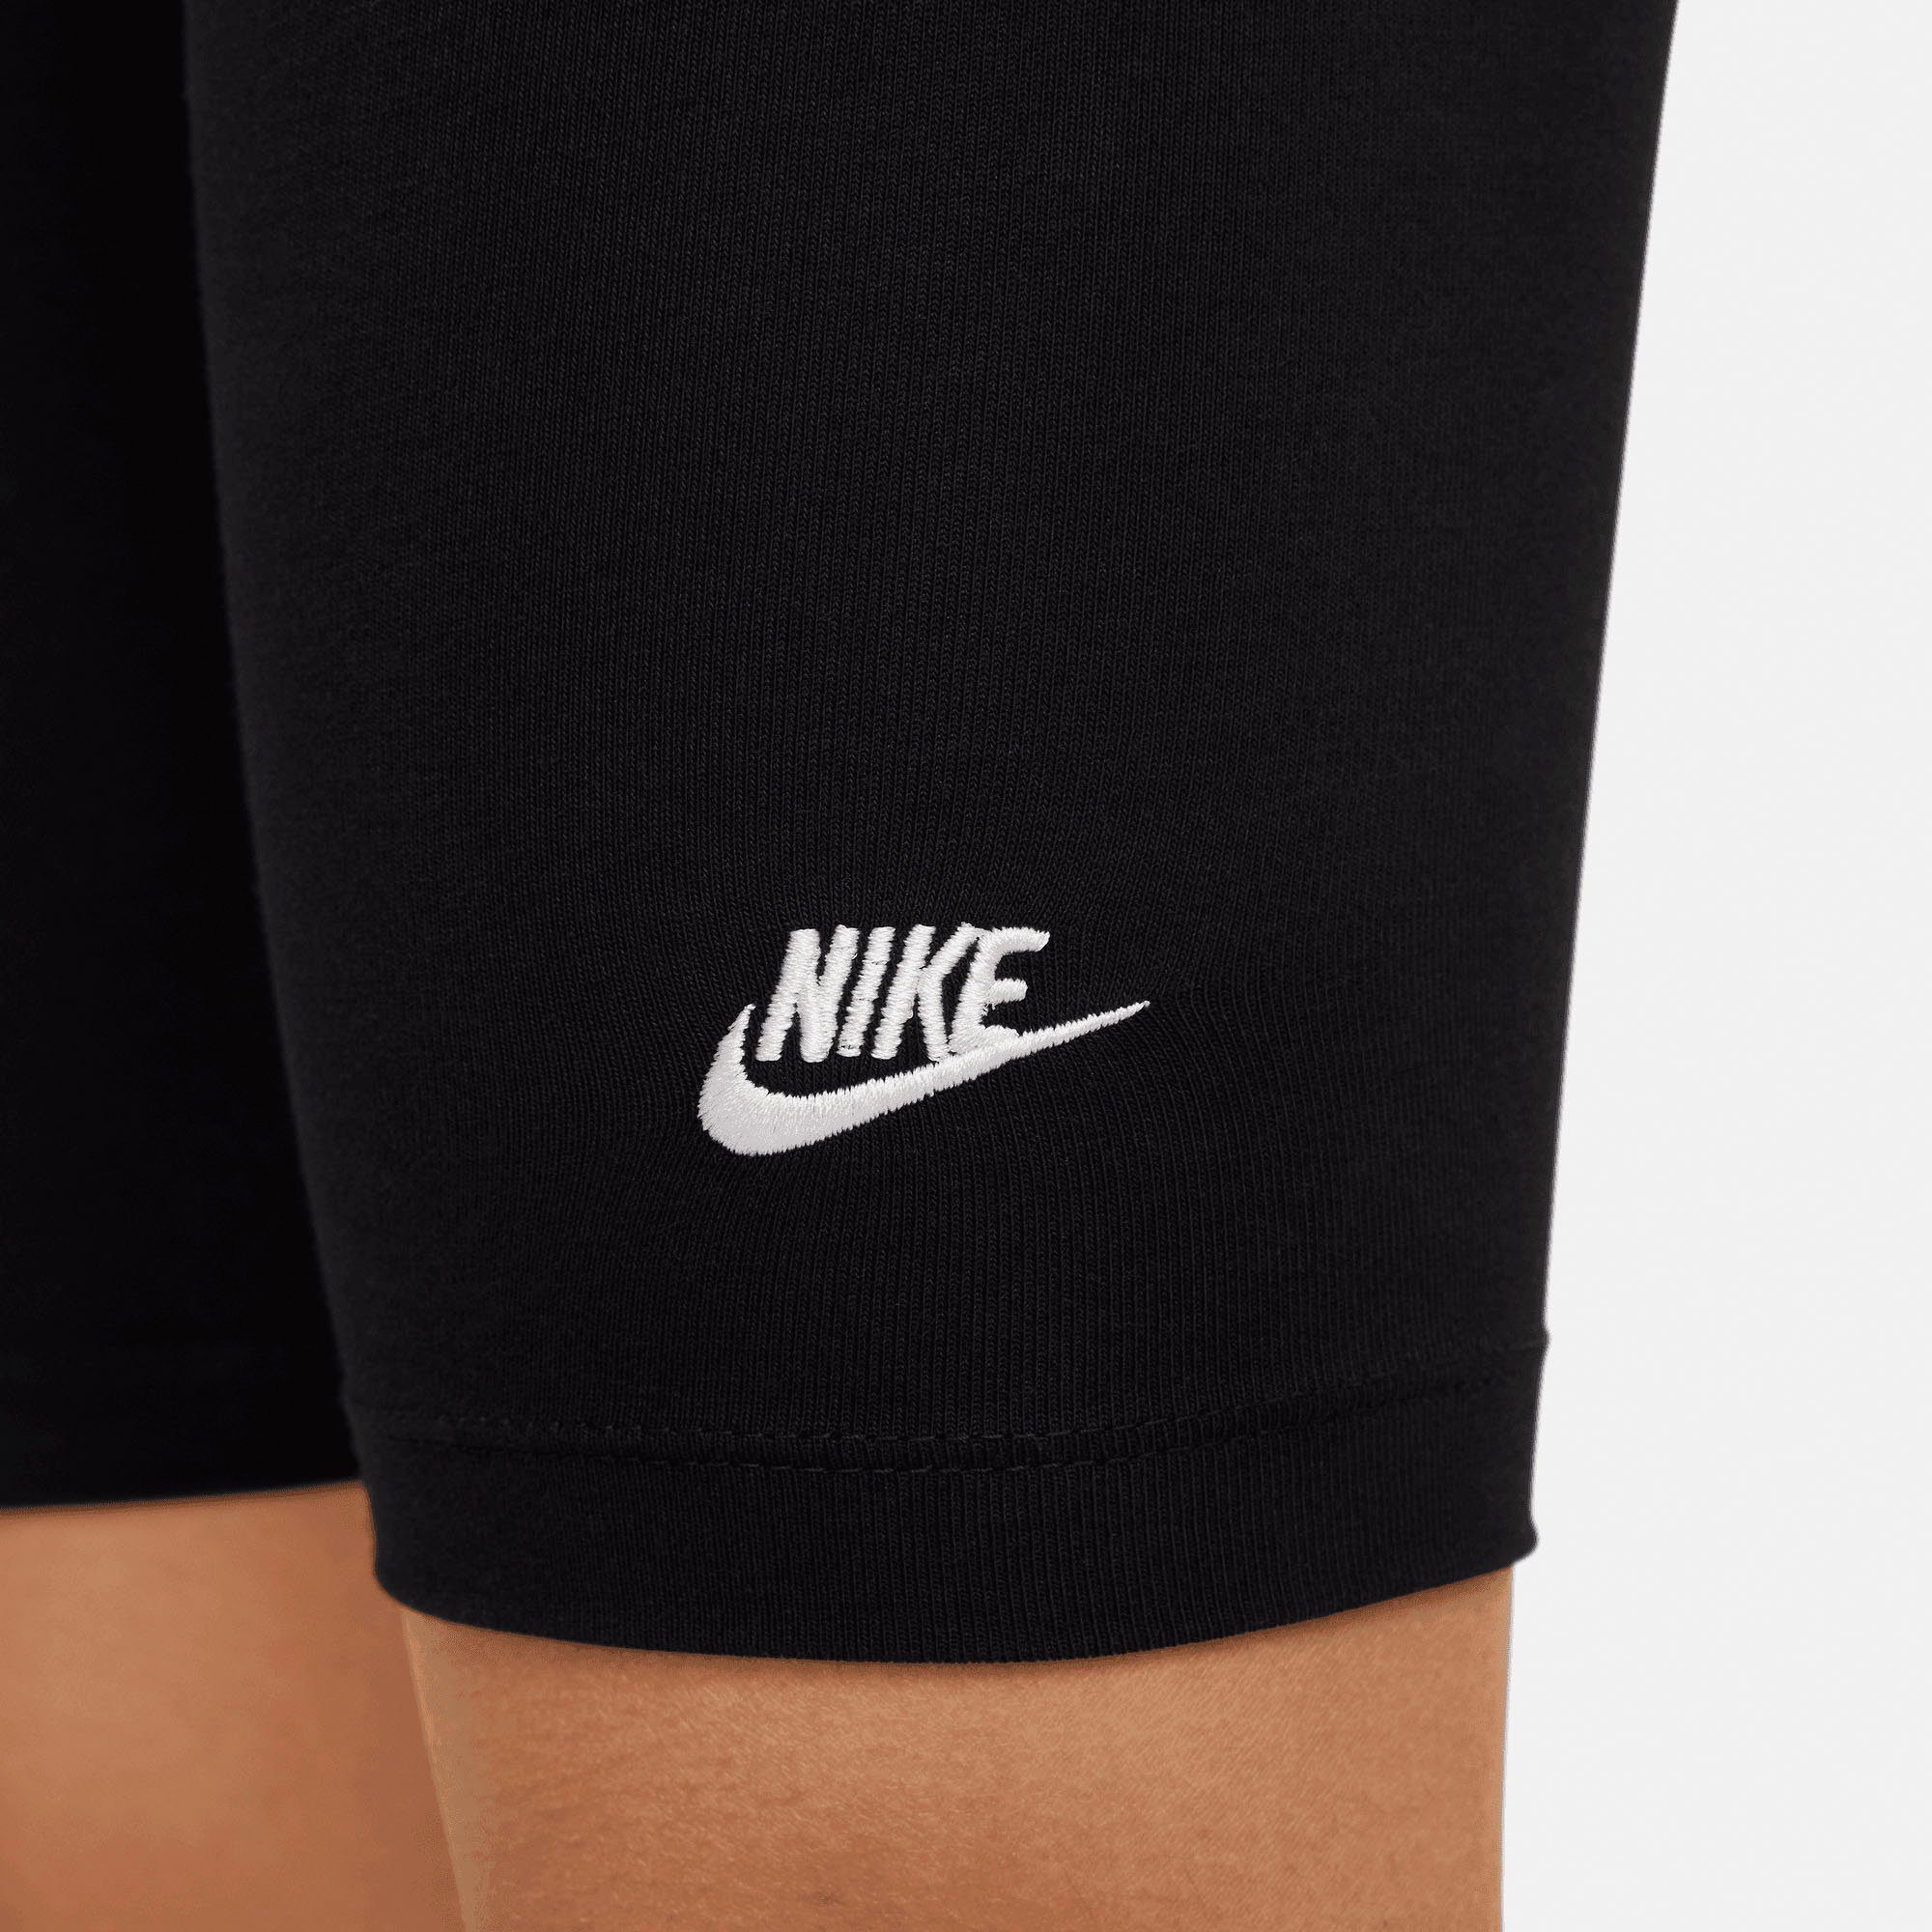 Nike " Sportswear Shorts (Girls) Bike Big Leggings Kids'